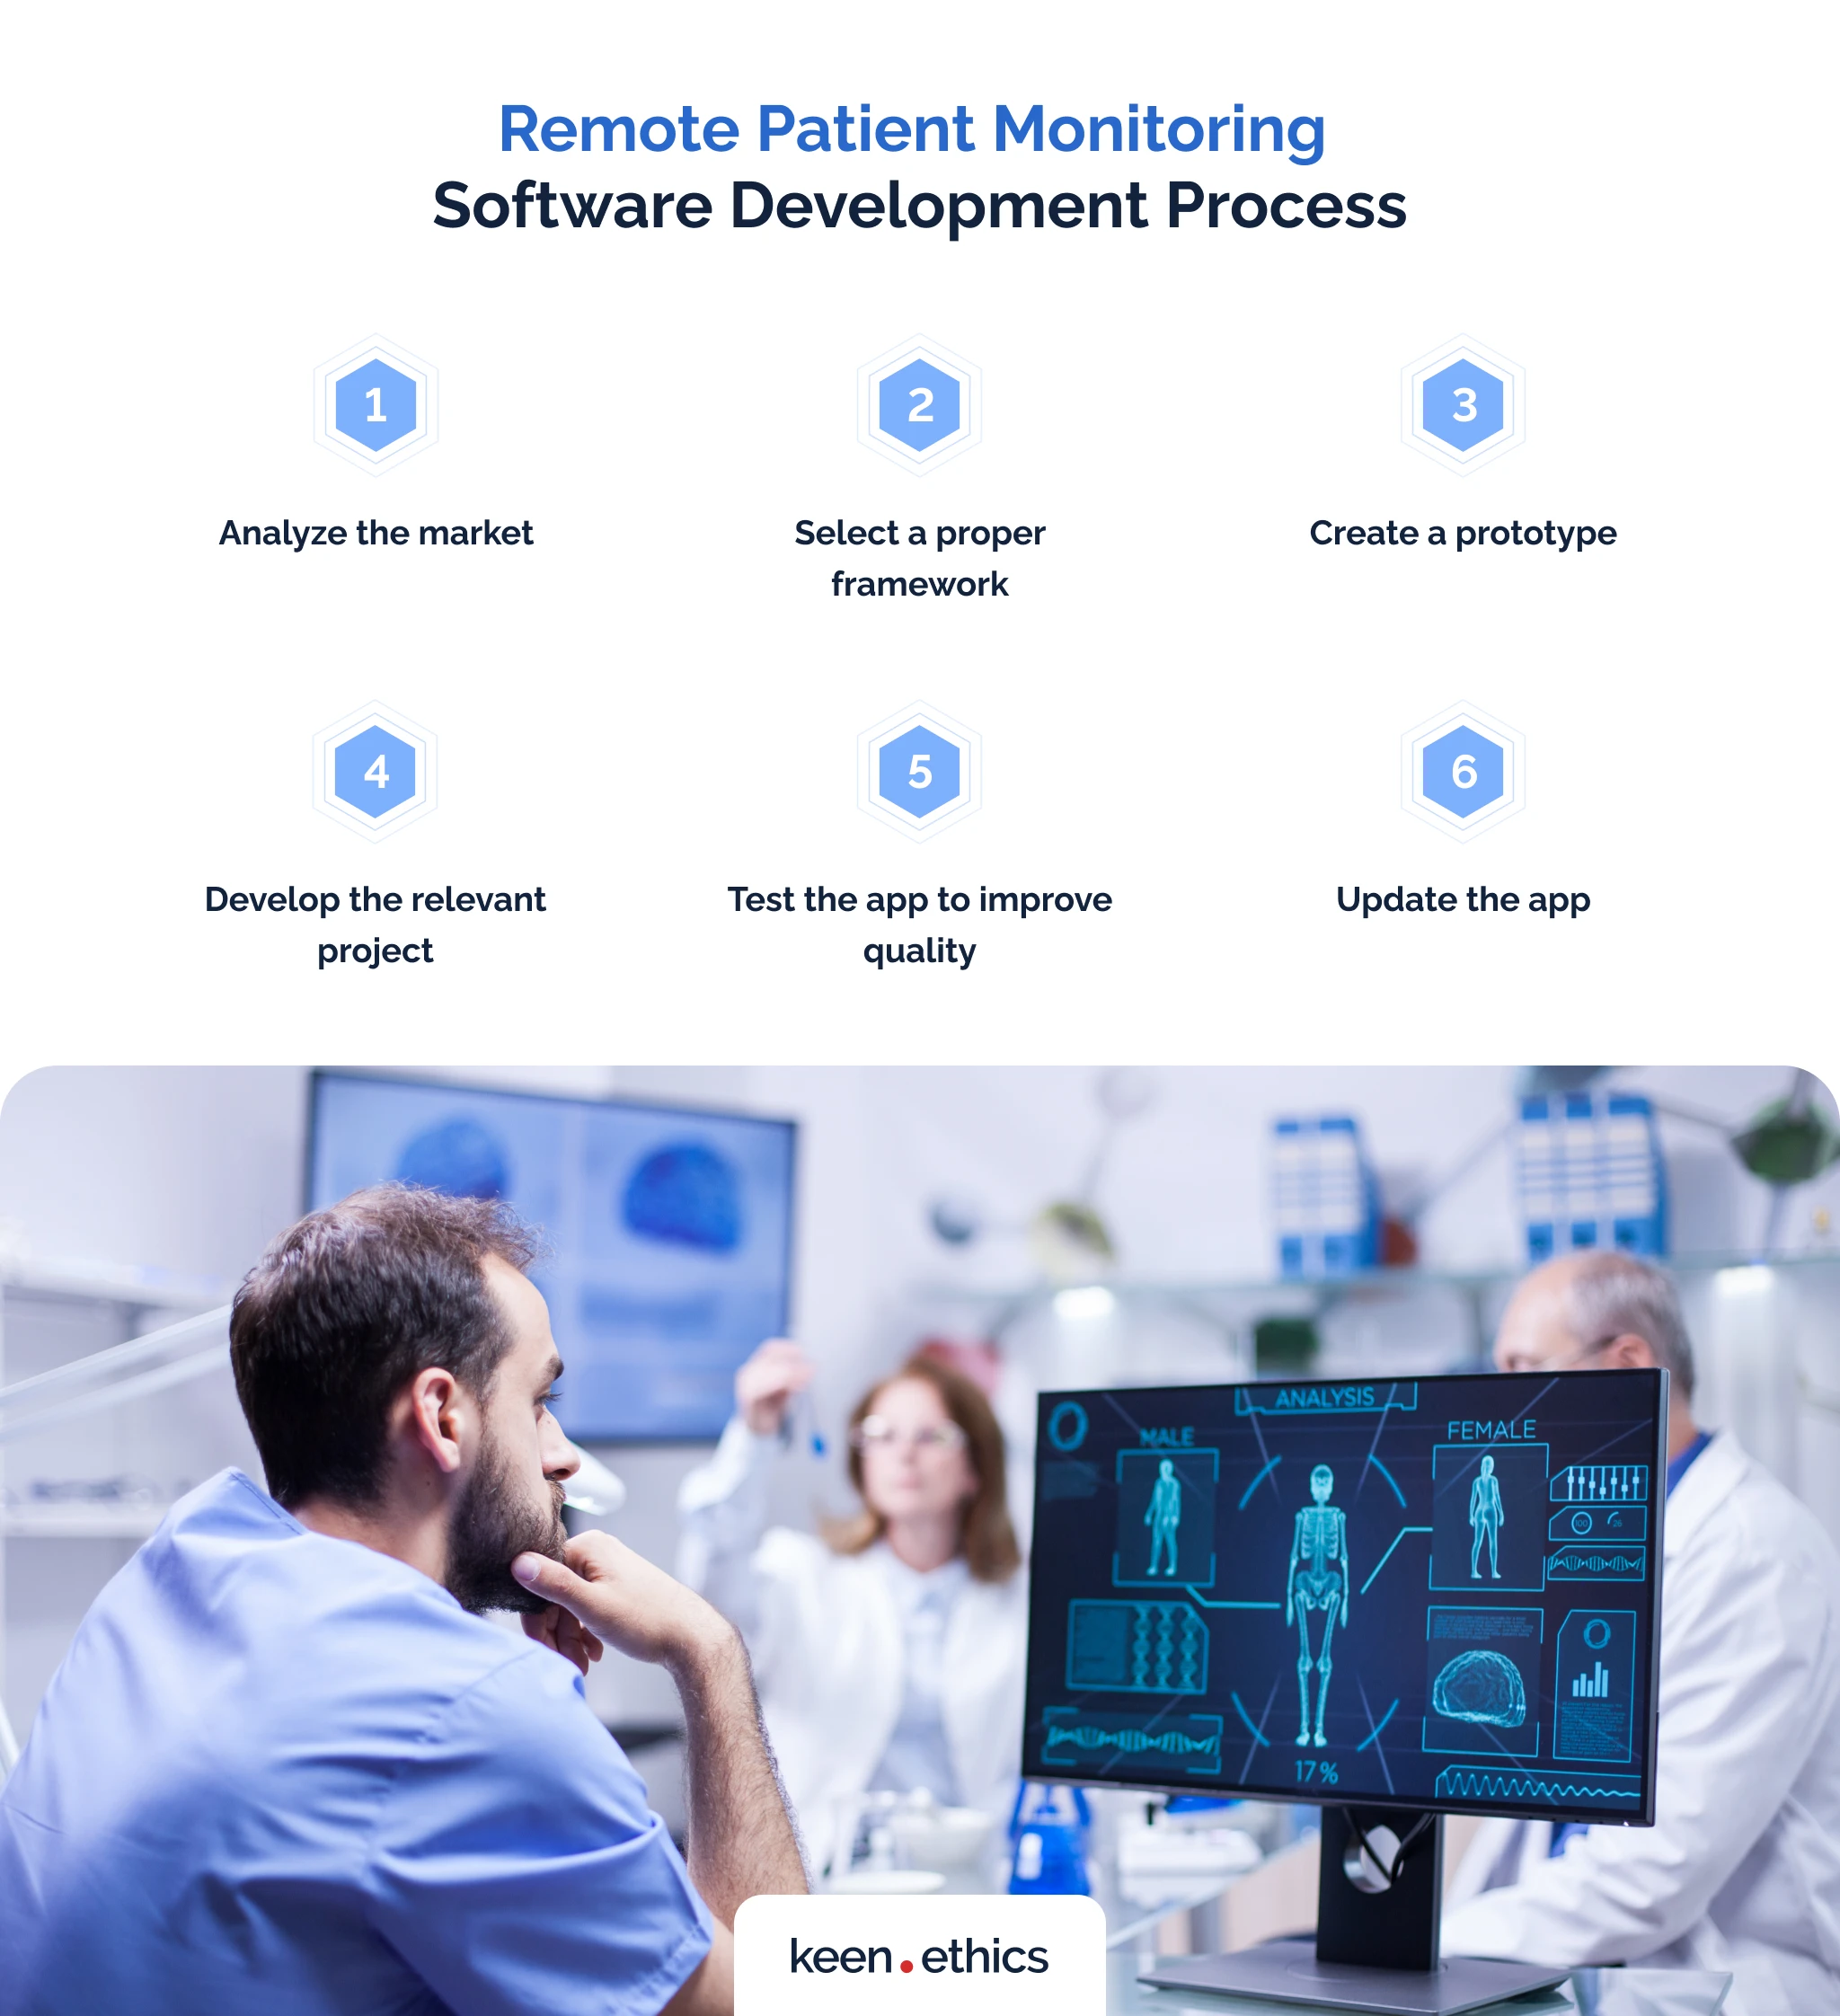 Remote patient monitoring software development process